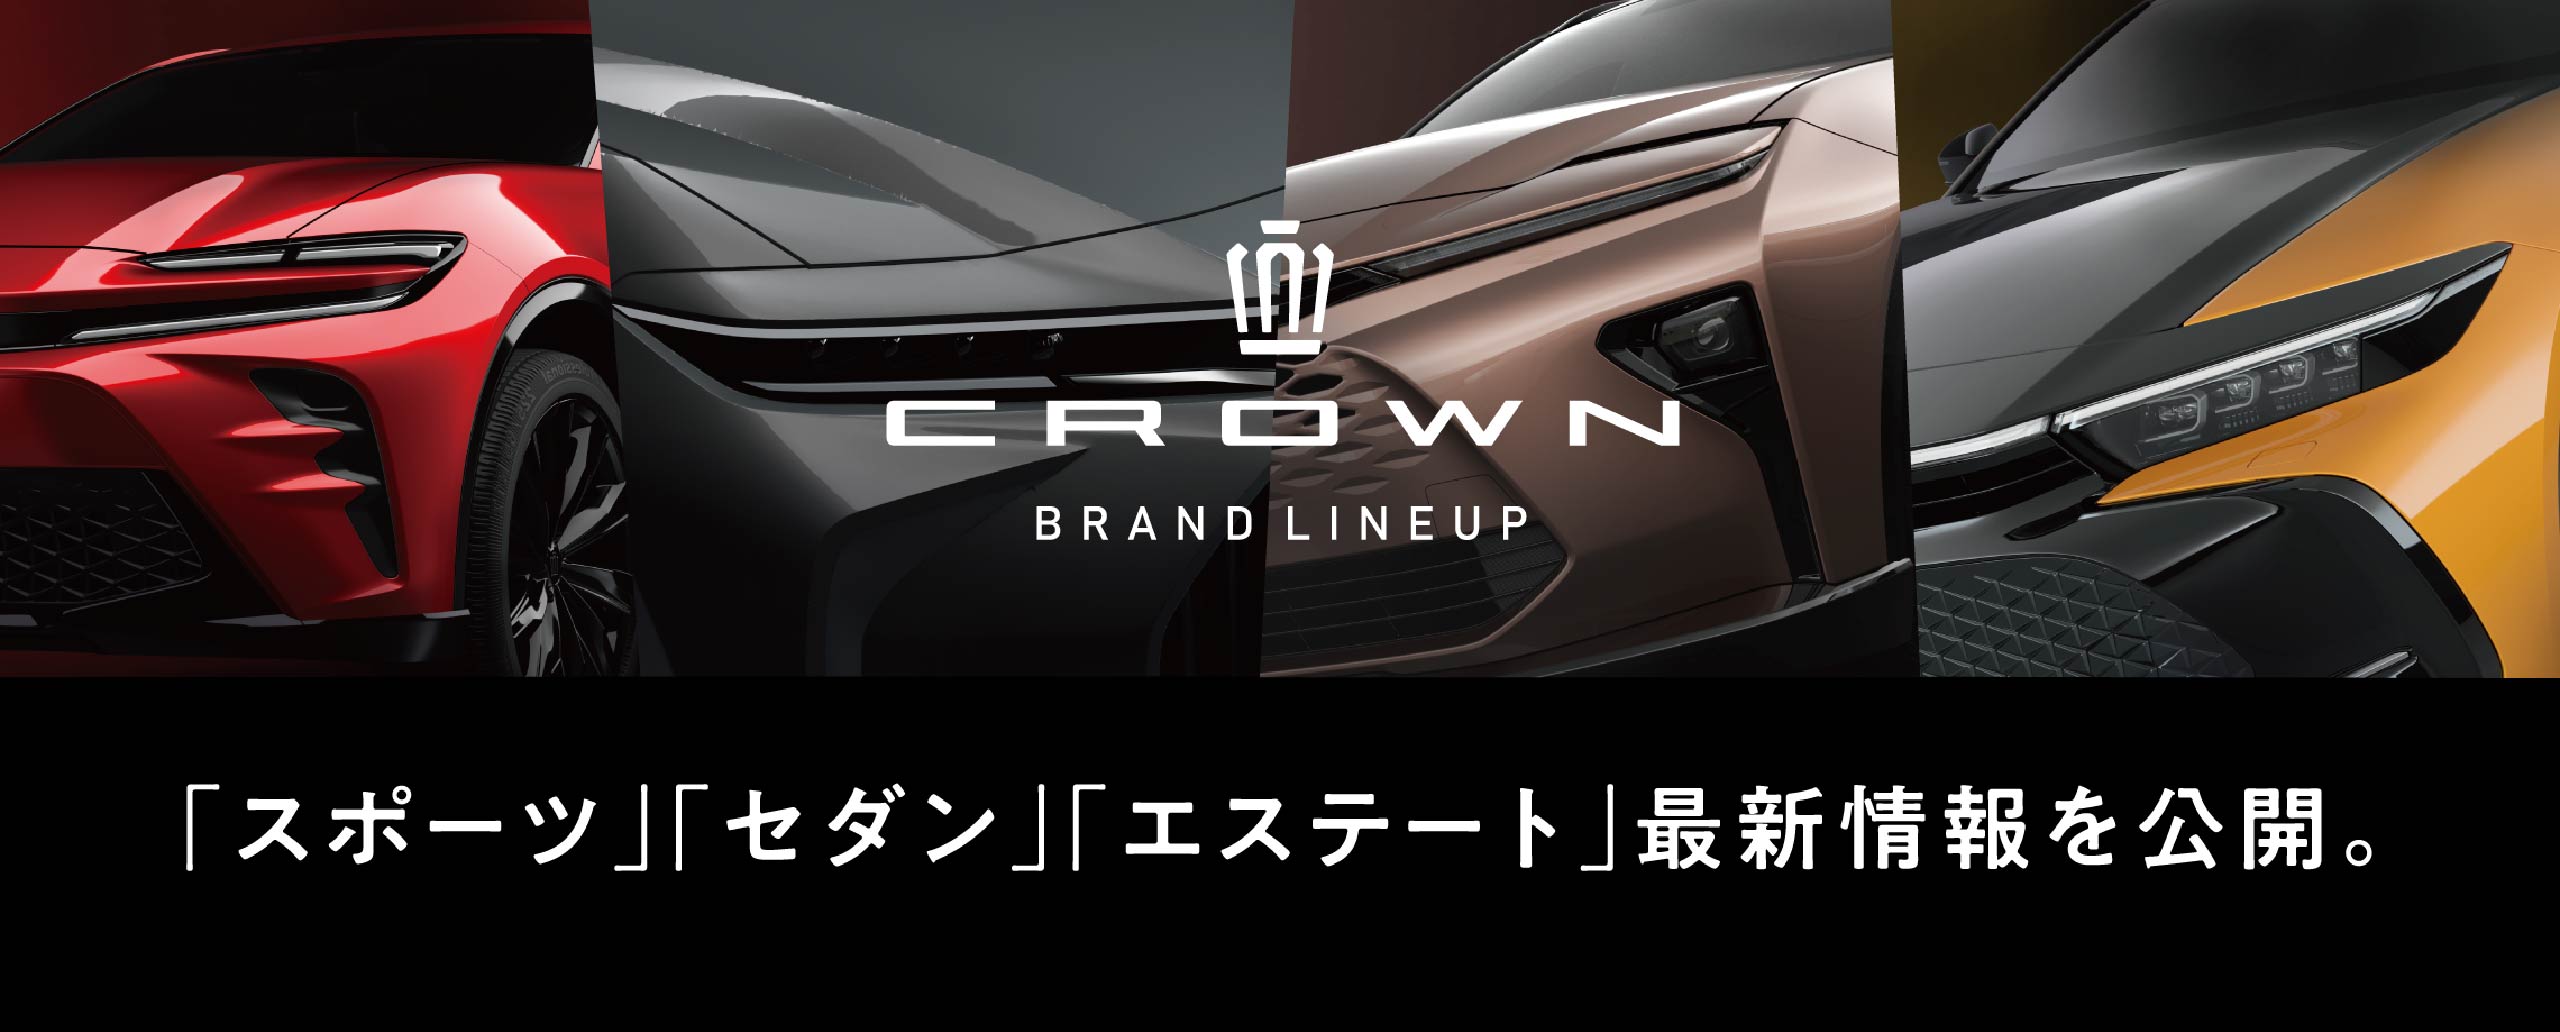 CROWN BRAND LINEUP「スポーツ」「セダン」「エステート」最新情報を公開。